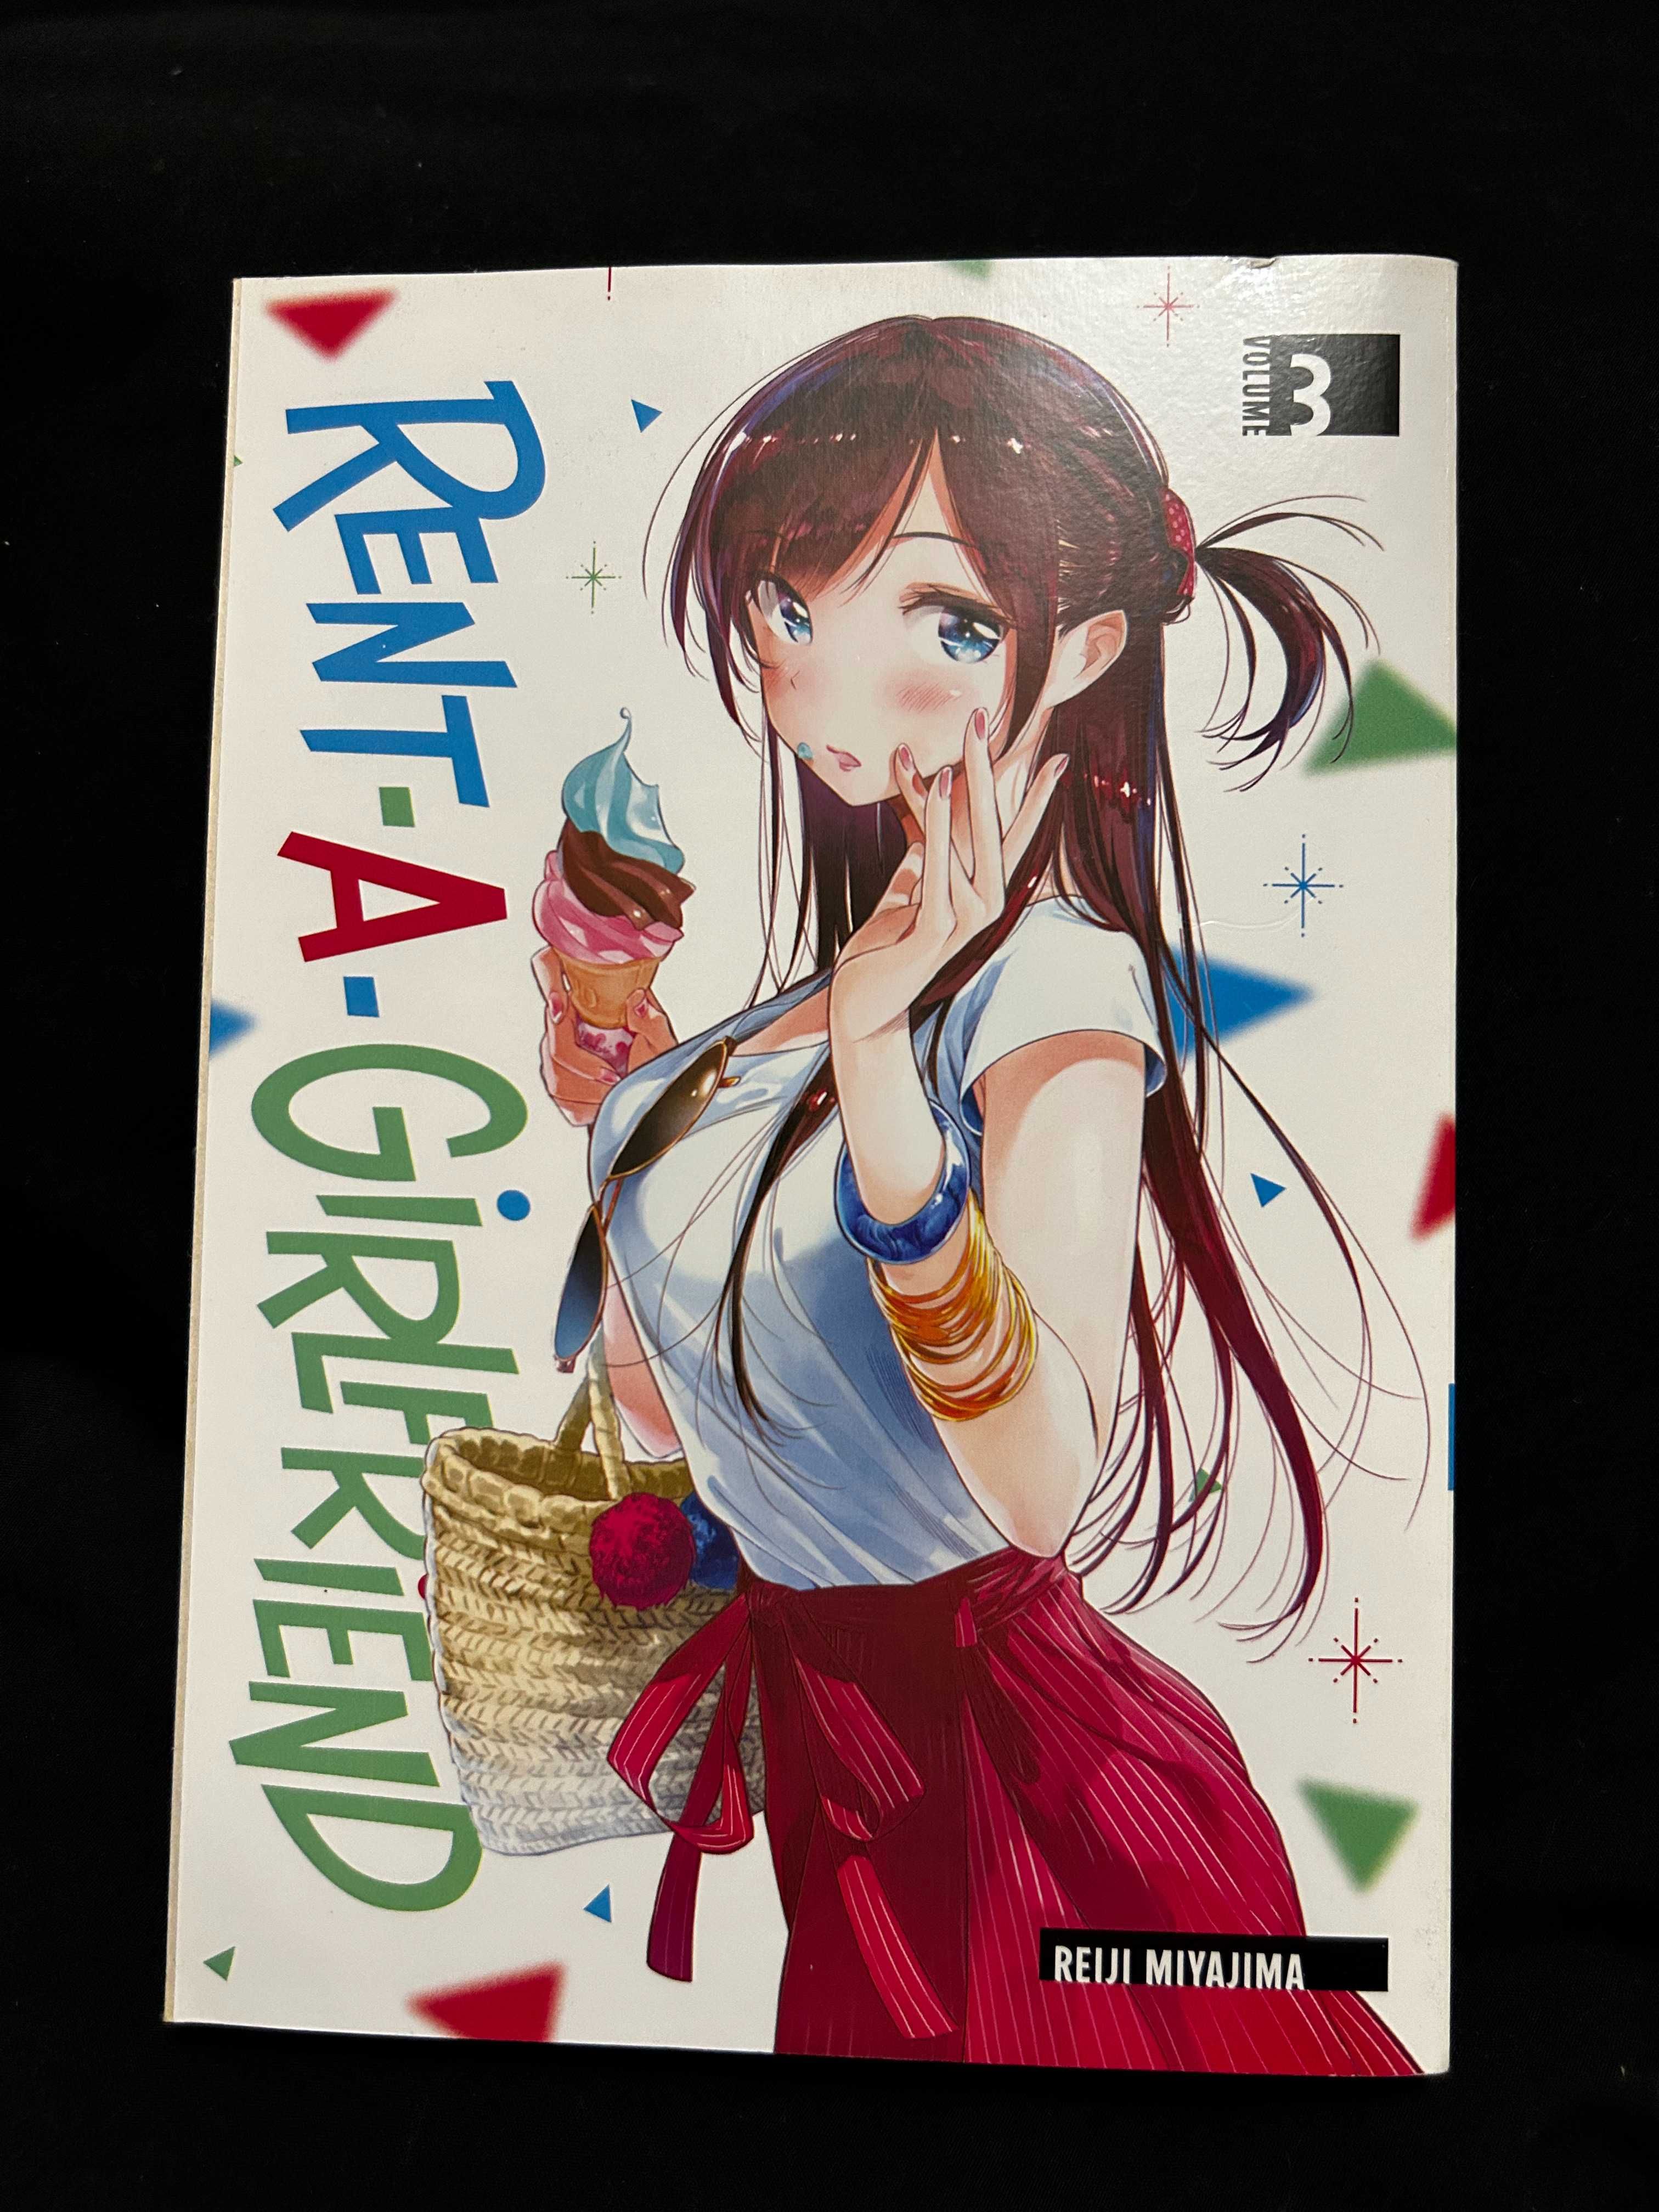 Rent a Girlfriend (Manga em inglês) Vol 1 - 4